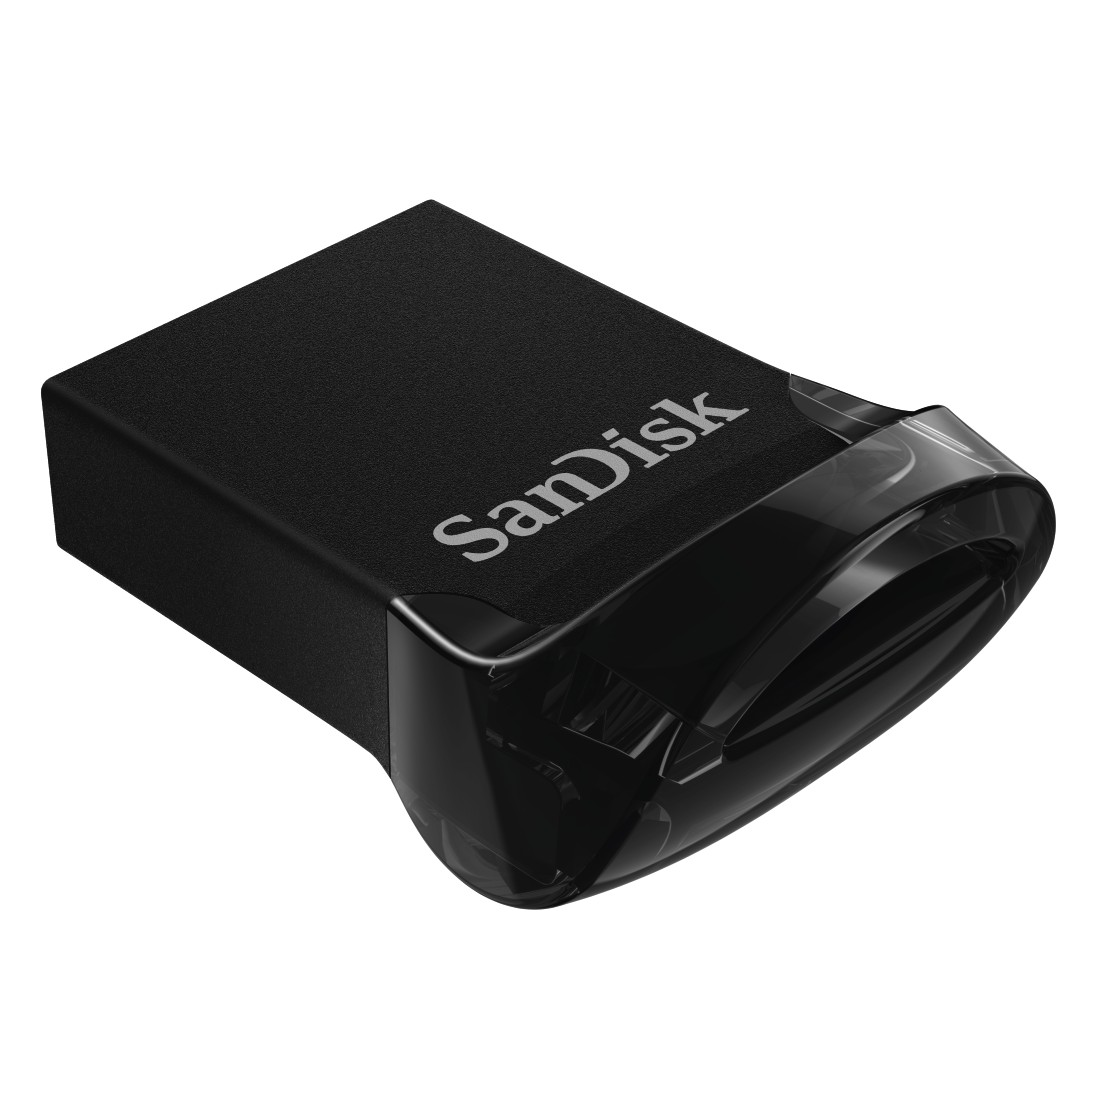 USB kľúč SanDisk Ultra Fit, 64GB, USB 3.1 - rýchlosť 130MB/s (SDCZ430-064G-G46)